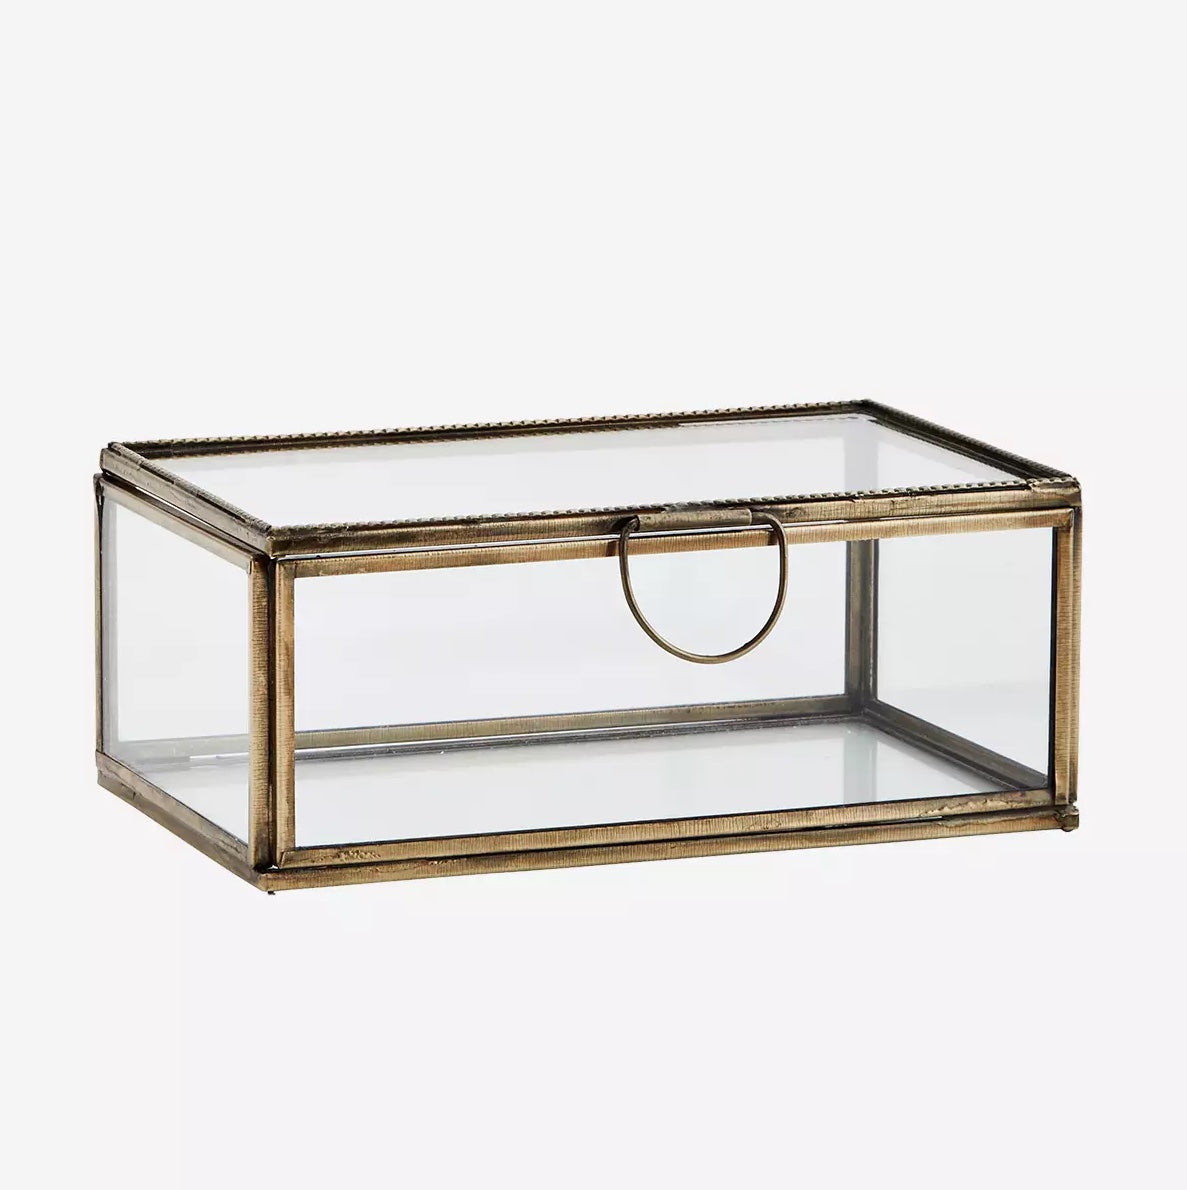 Patinated brass rectangular box